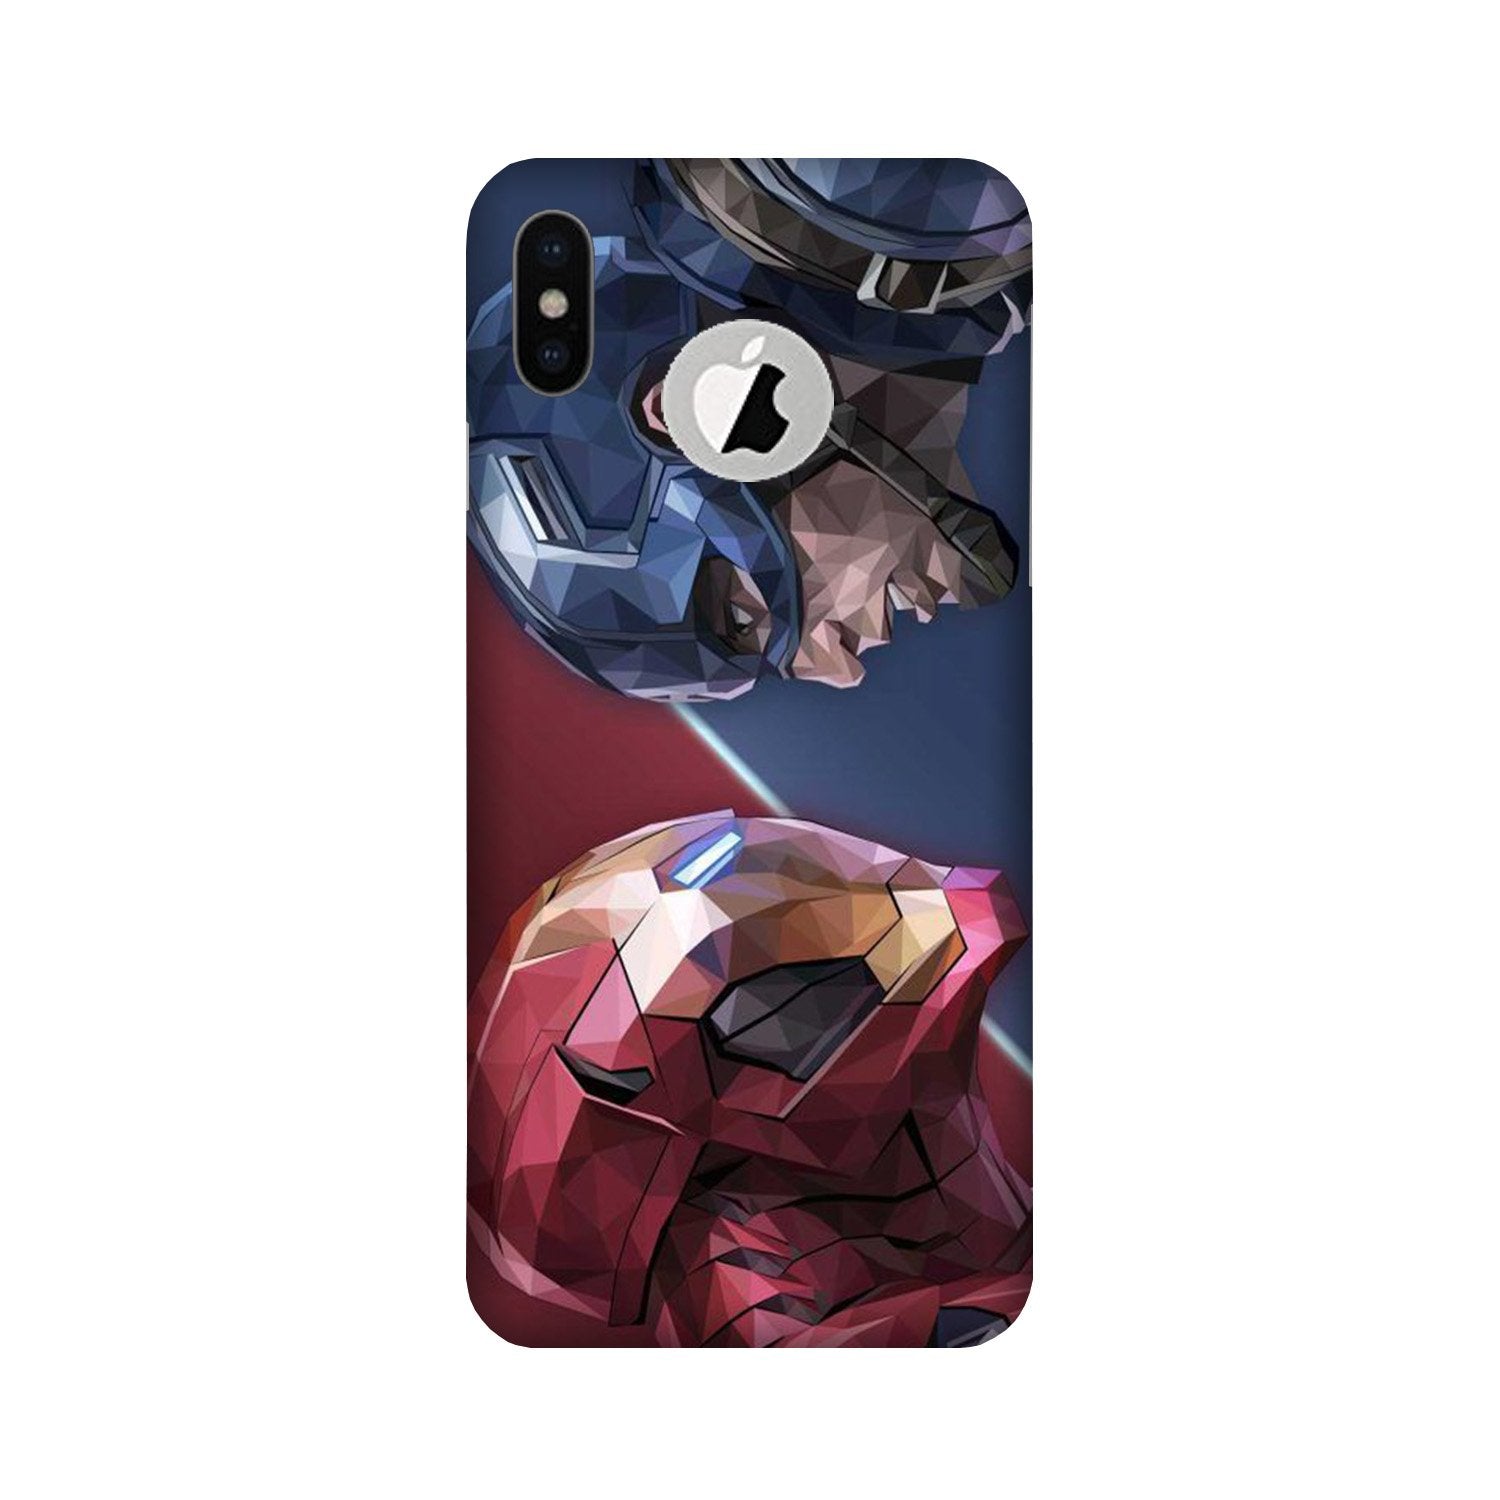 Ironman Captain America Case for iPhone X logo cut (Design No. 245)